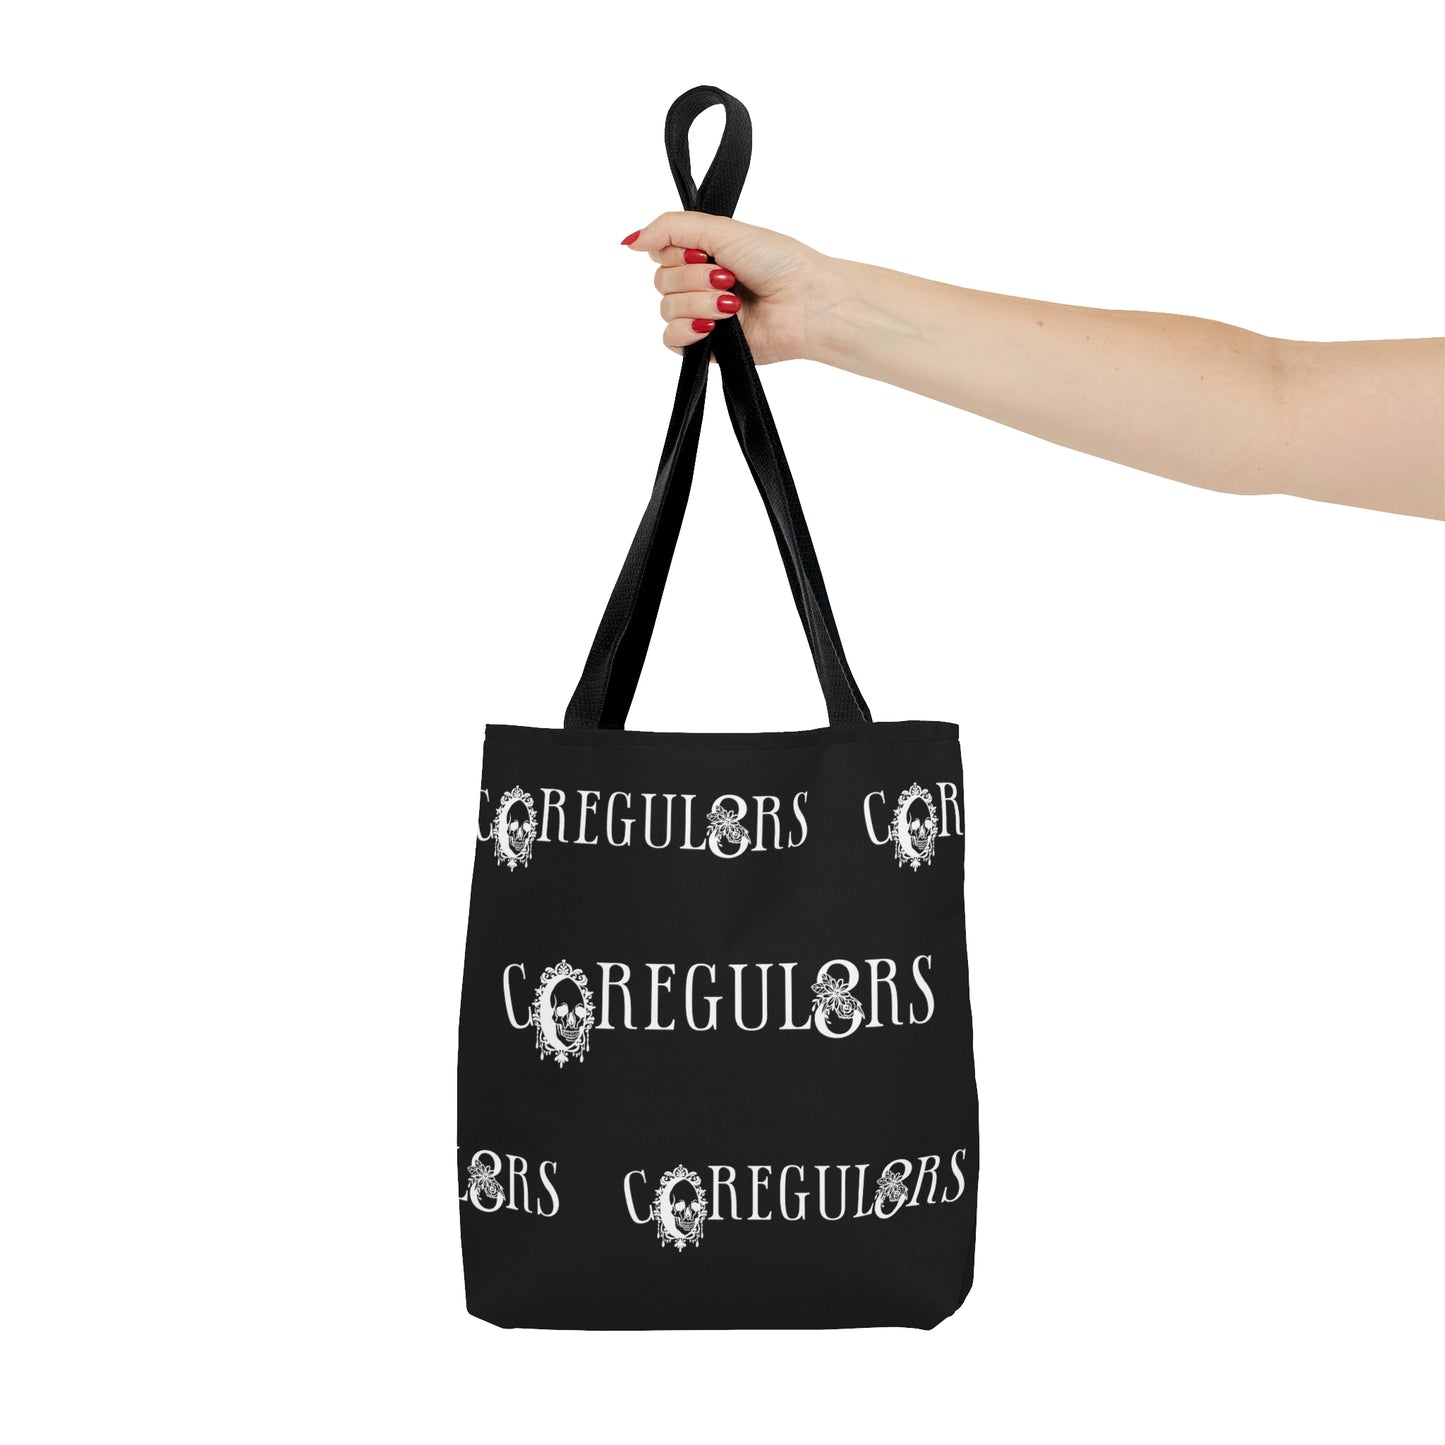 Official Co-Regulators Merch [Gauthism Line] Black Tote Bag in 3 sizes